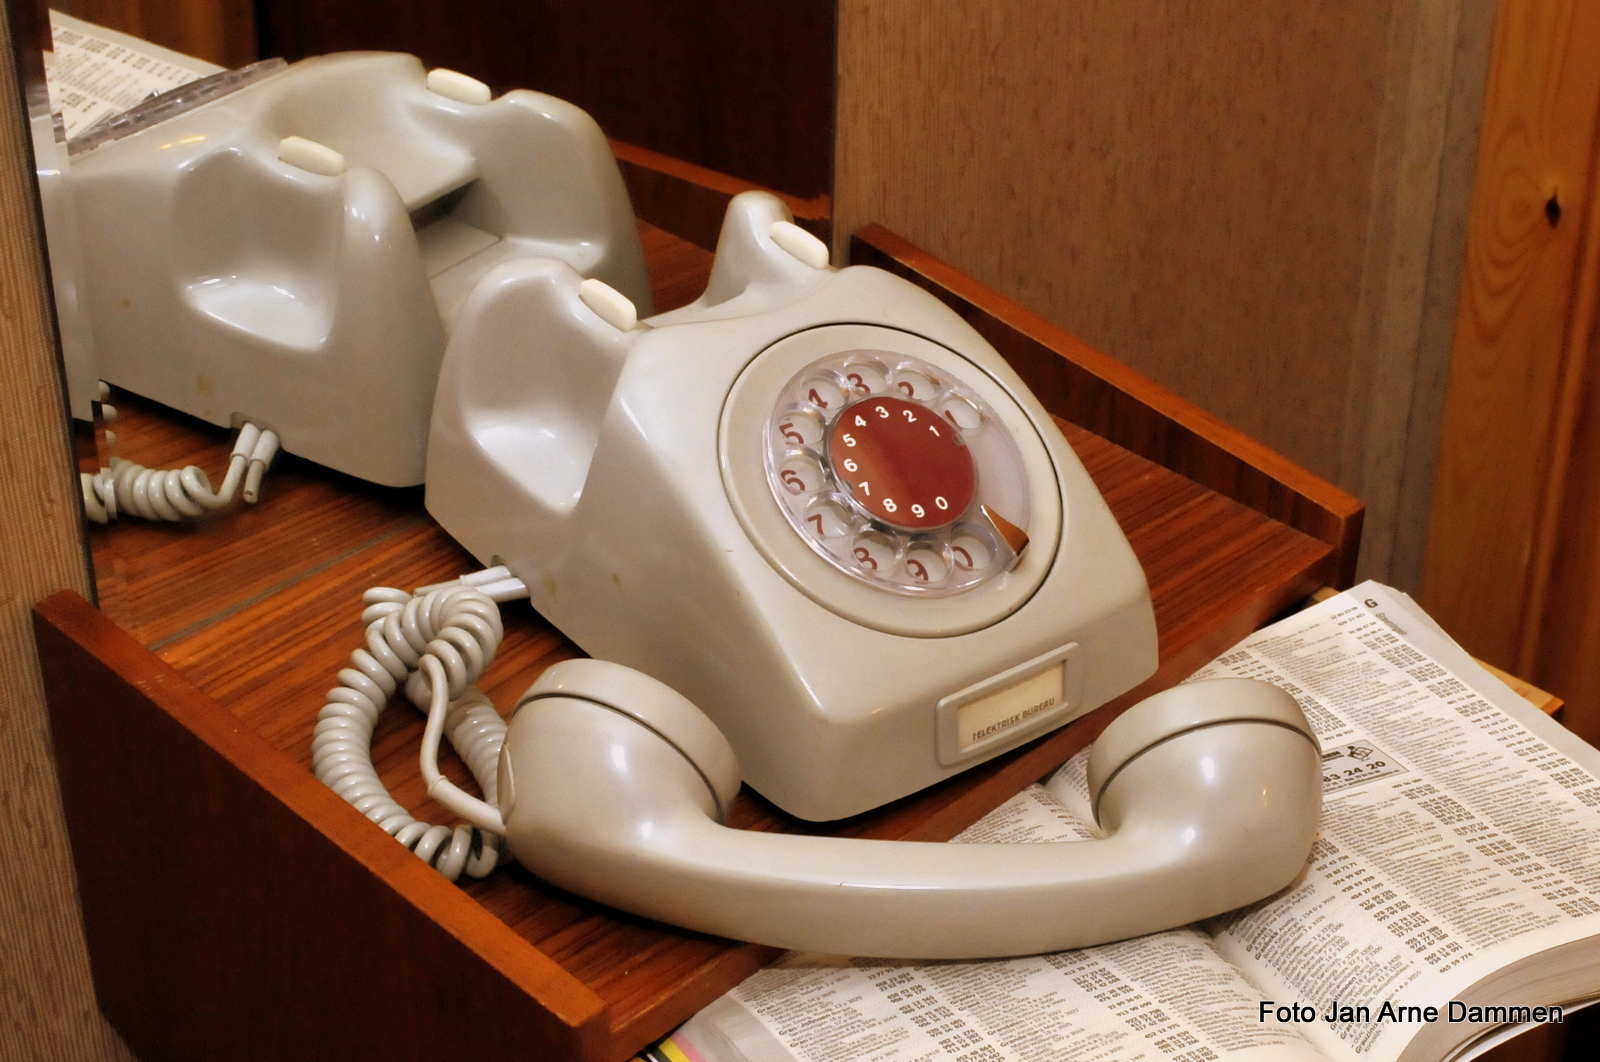 Det siste serieproduserte norske telefonapparatet med nummerskive. Foto Jan Arne Dammen